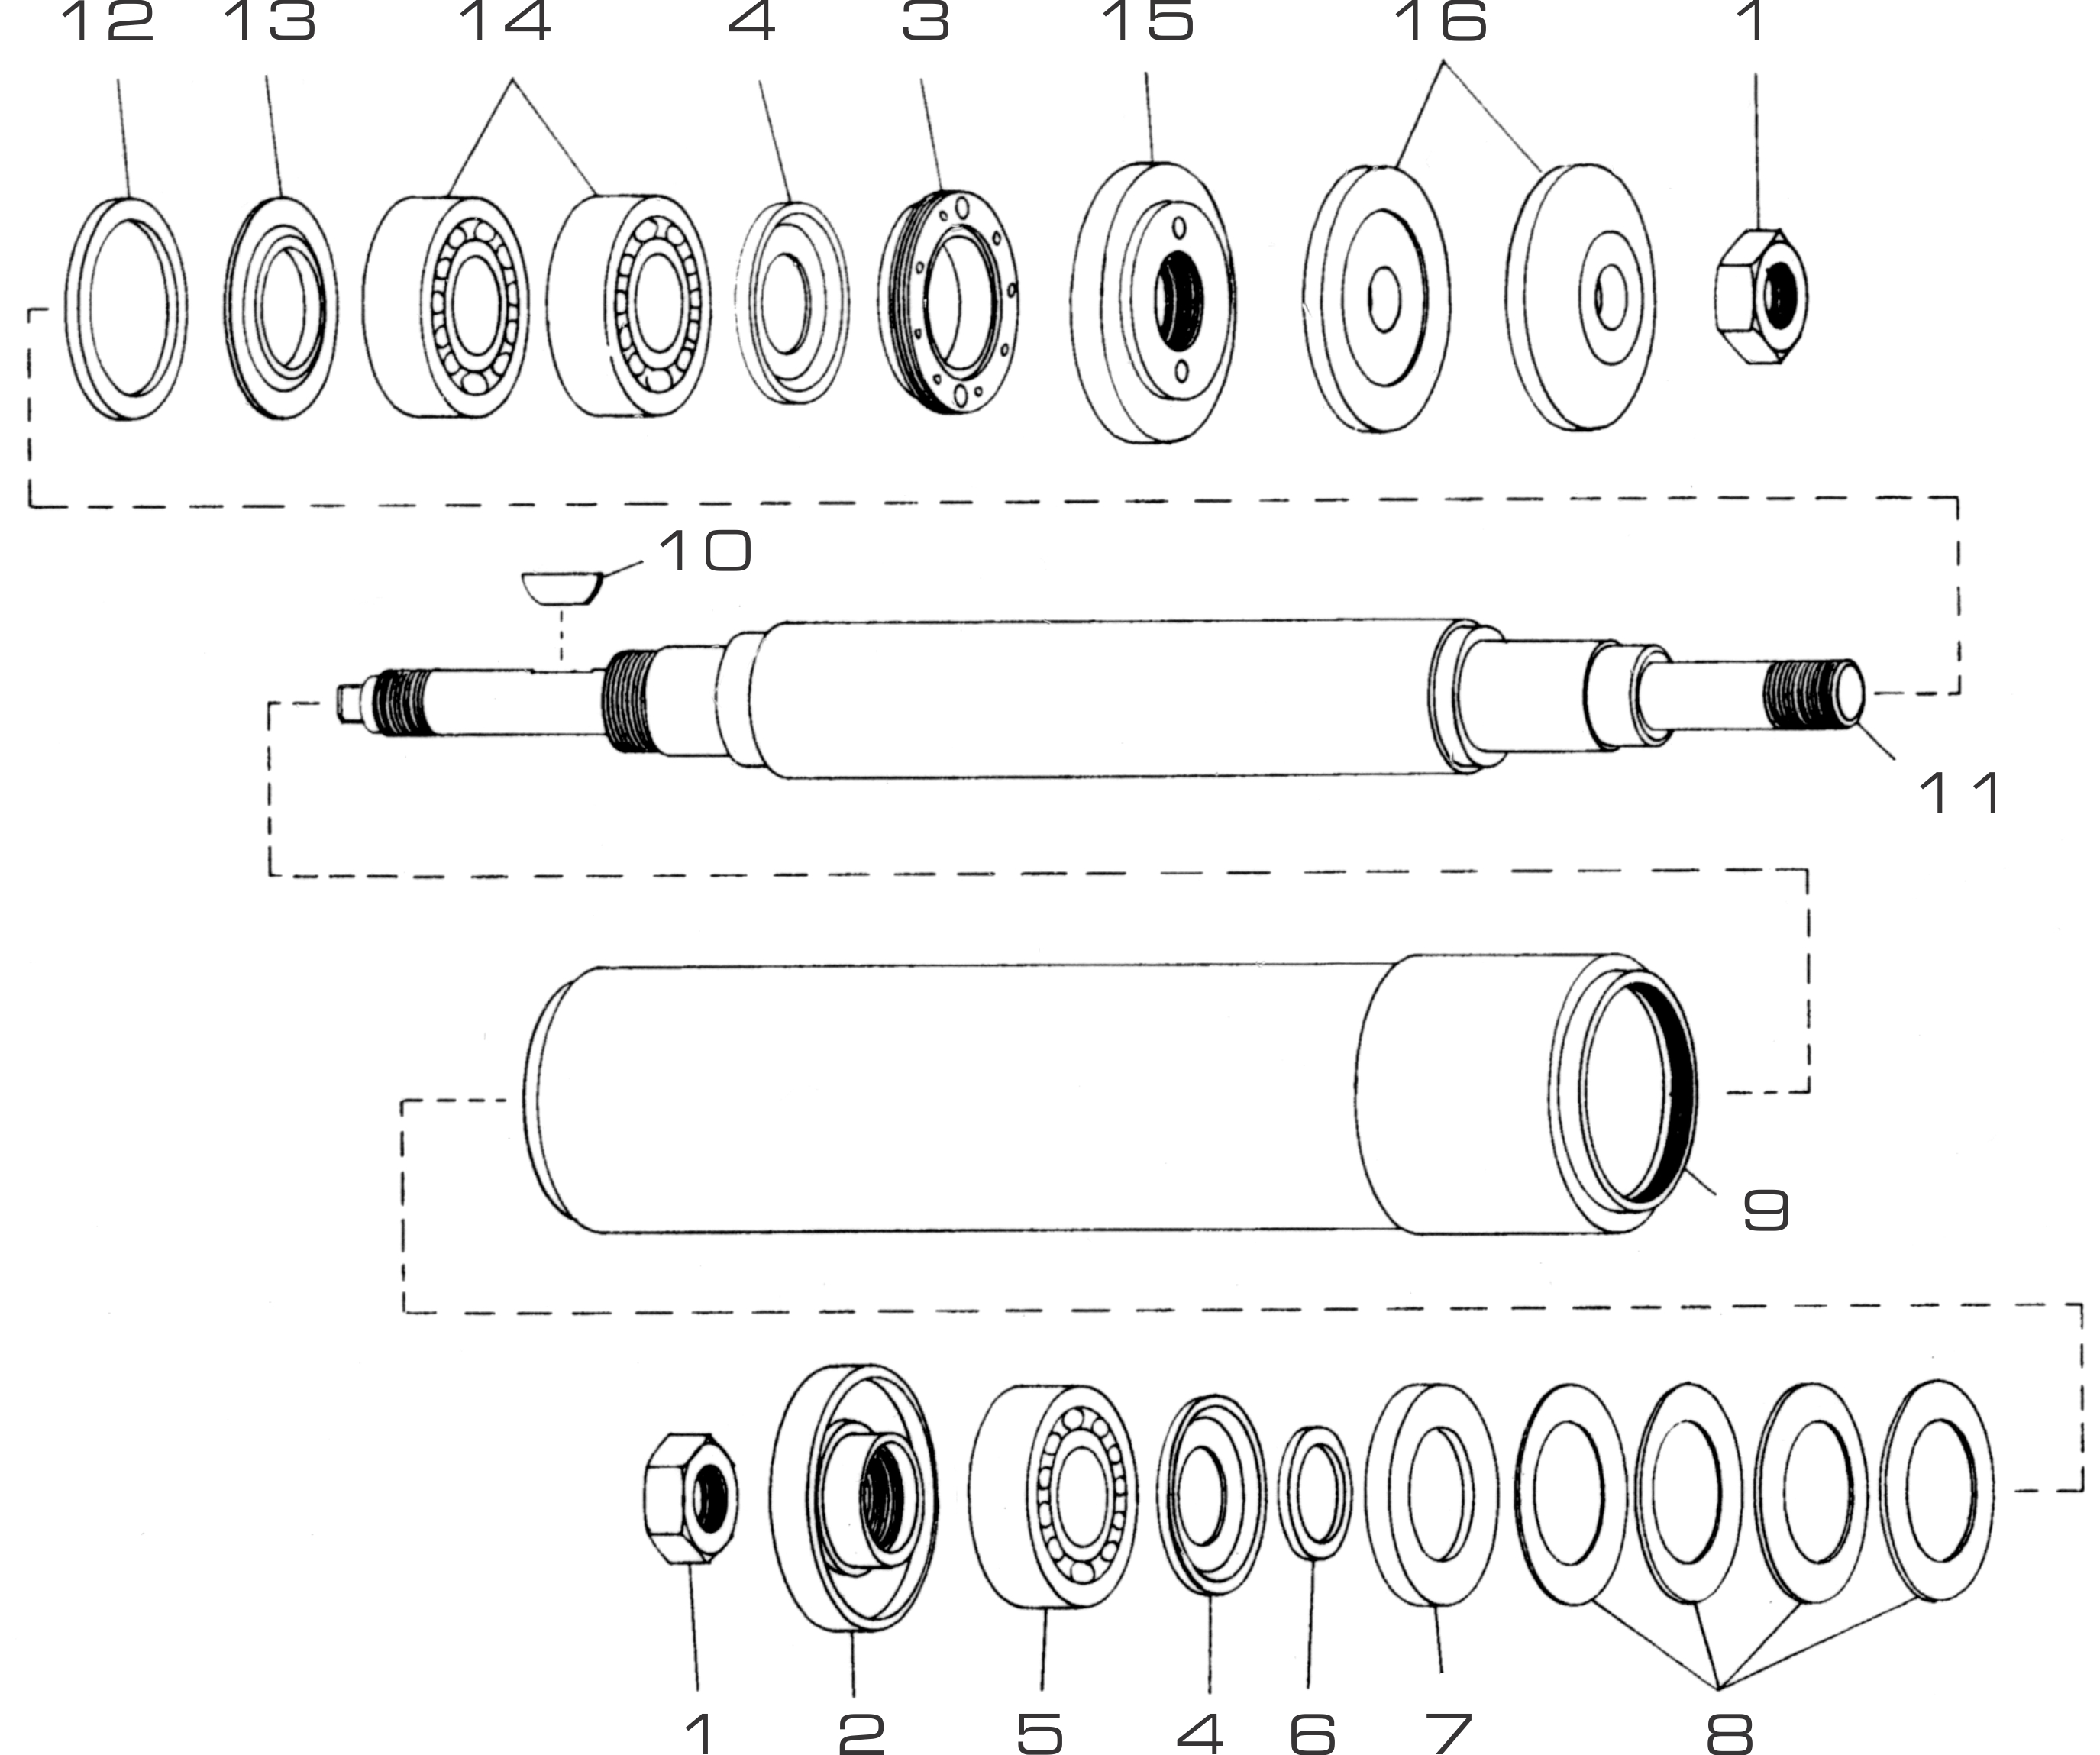 Tool Post Grinder 8" External Spindle Replacement Parts | Dumore Series 12 & 25 Tool Post Grinders